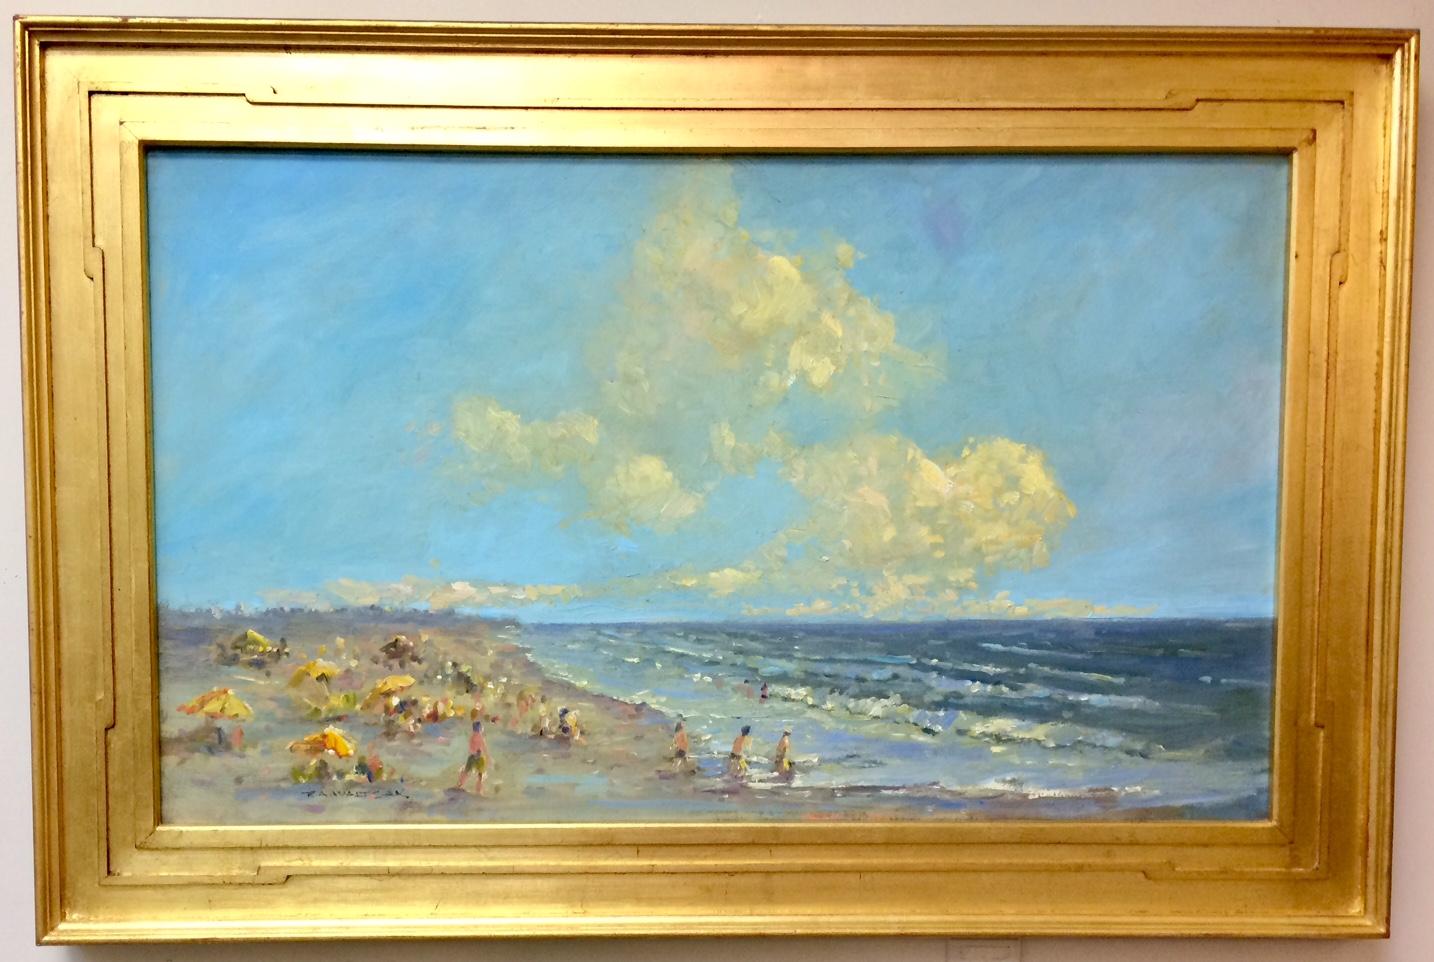 Robert Waltsak Figurative Painting - Sun Drenched, original 24x40 impressionist marine landscape